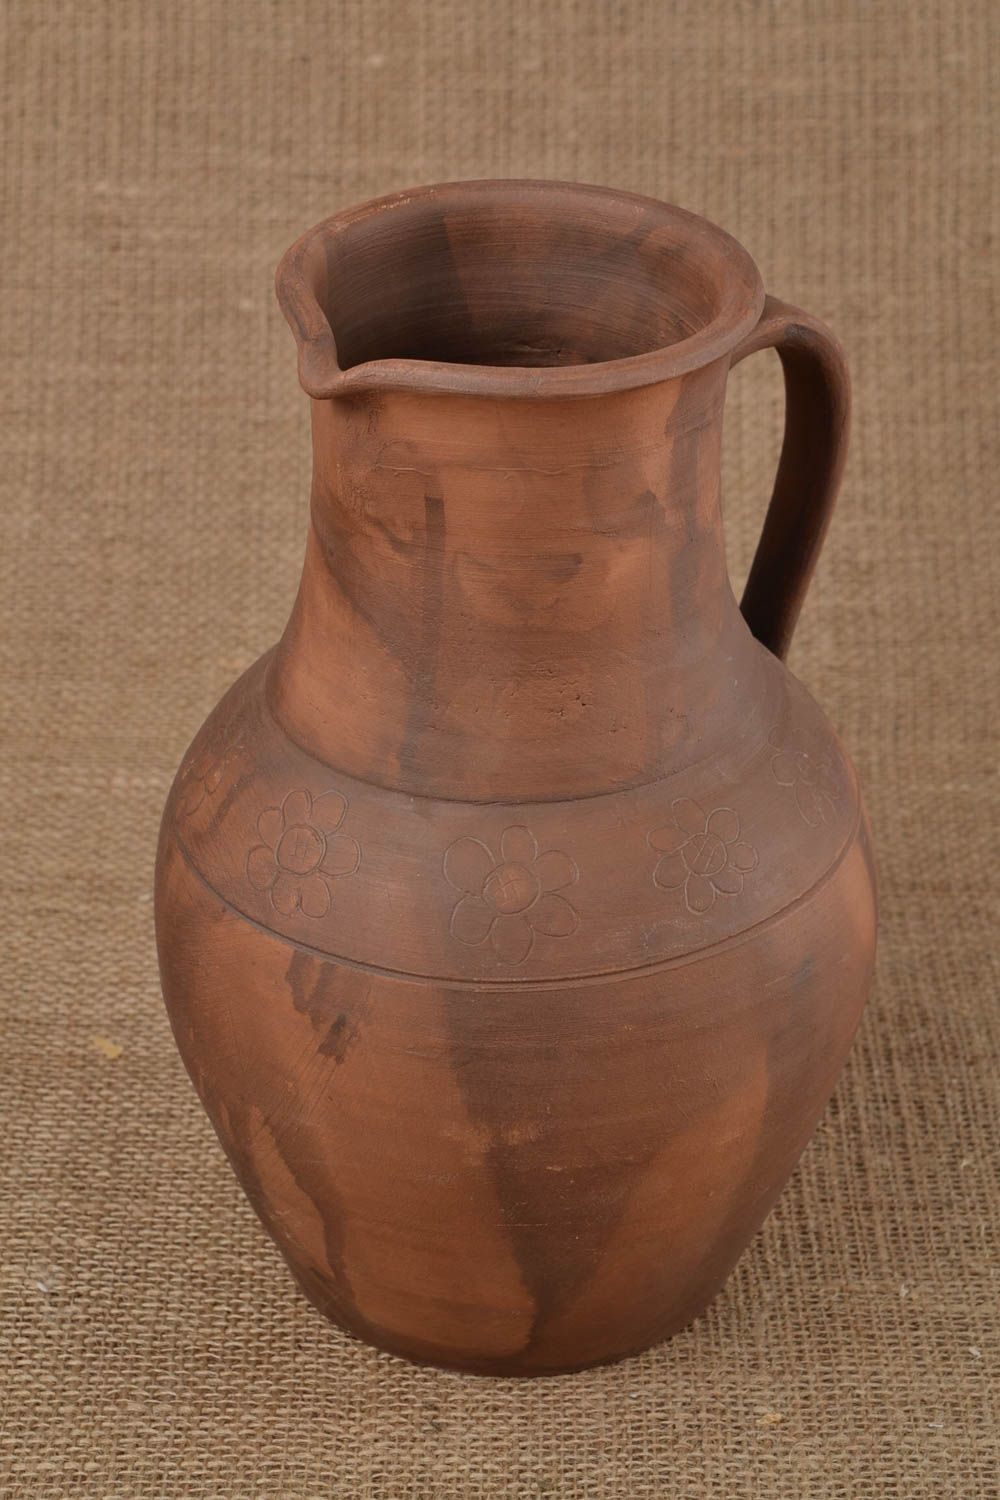 100 oz ceramic clay jug pitcher carafe in brown color 2,9 lb photo 1